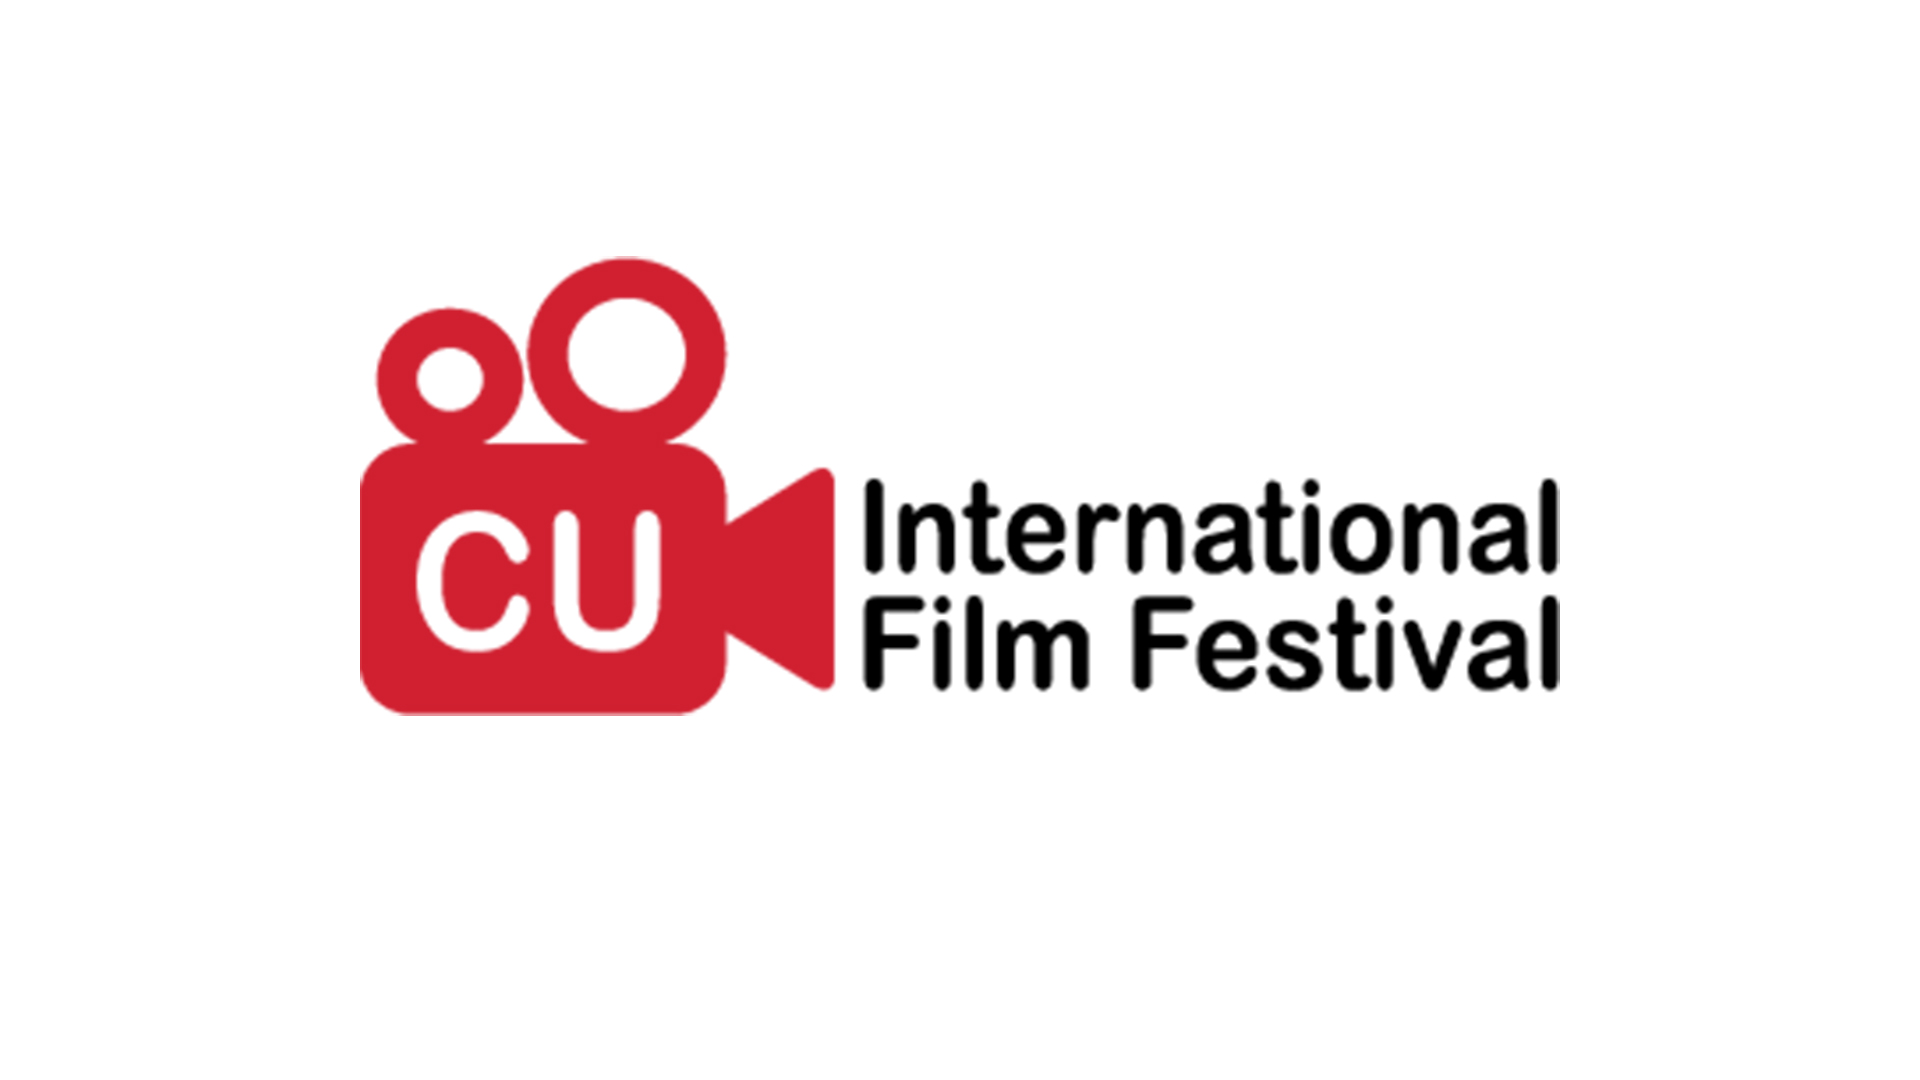 CU International Film Festival logo in black and red